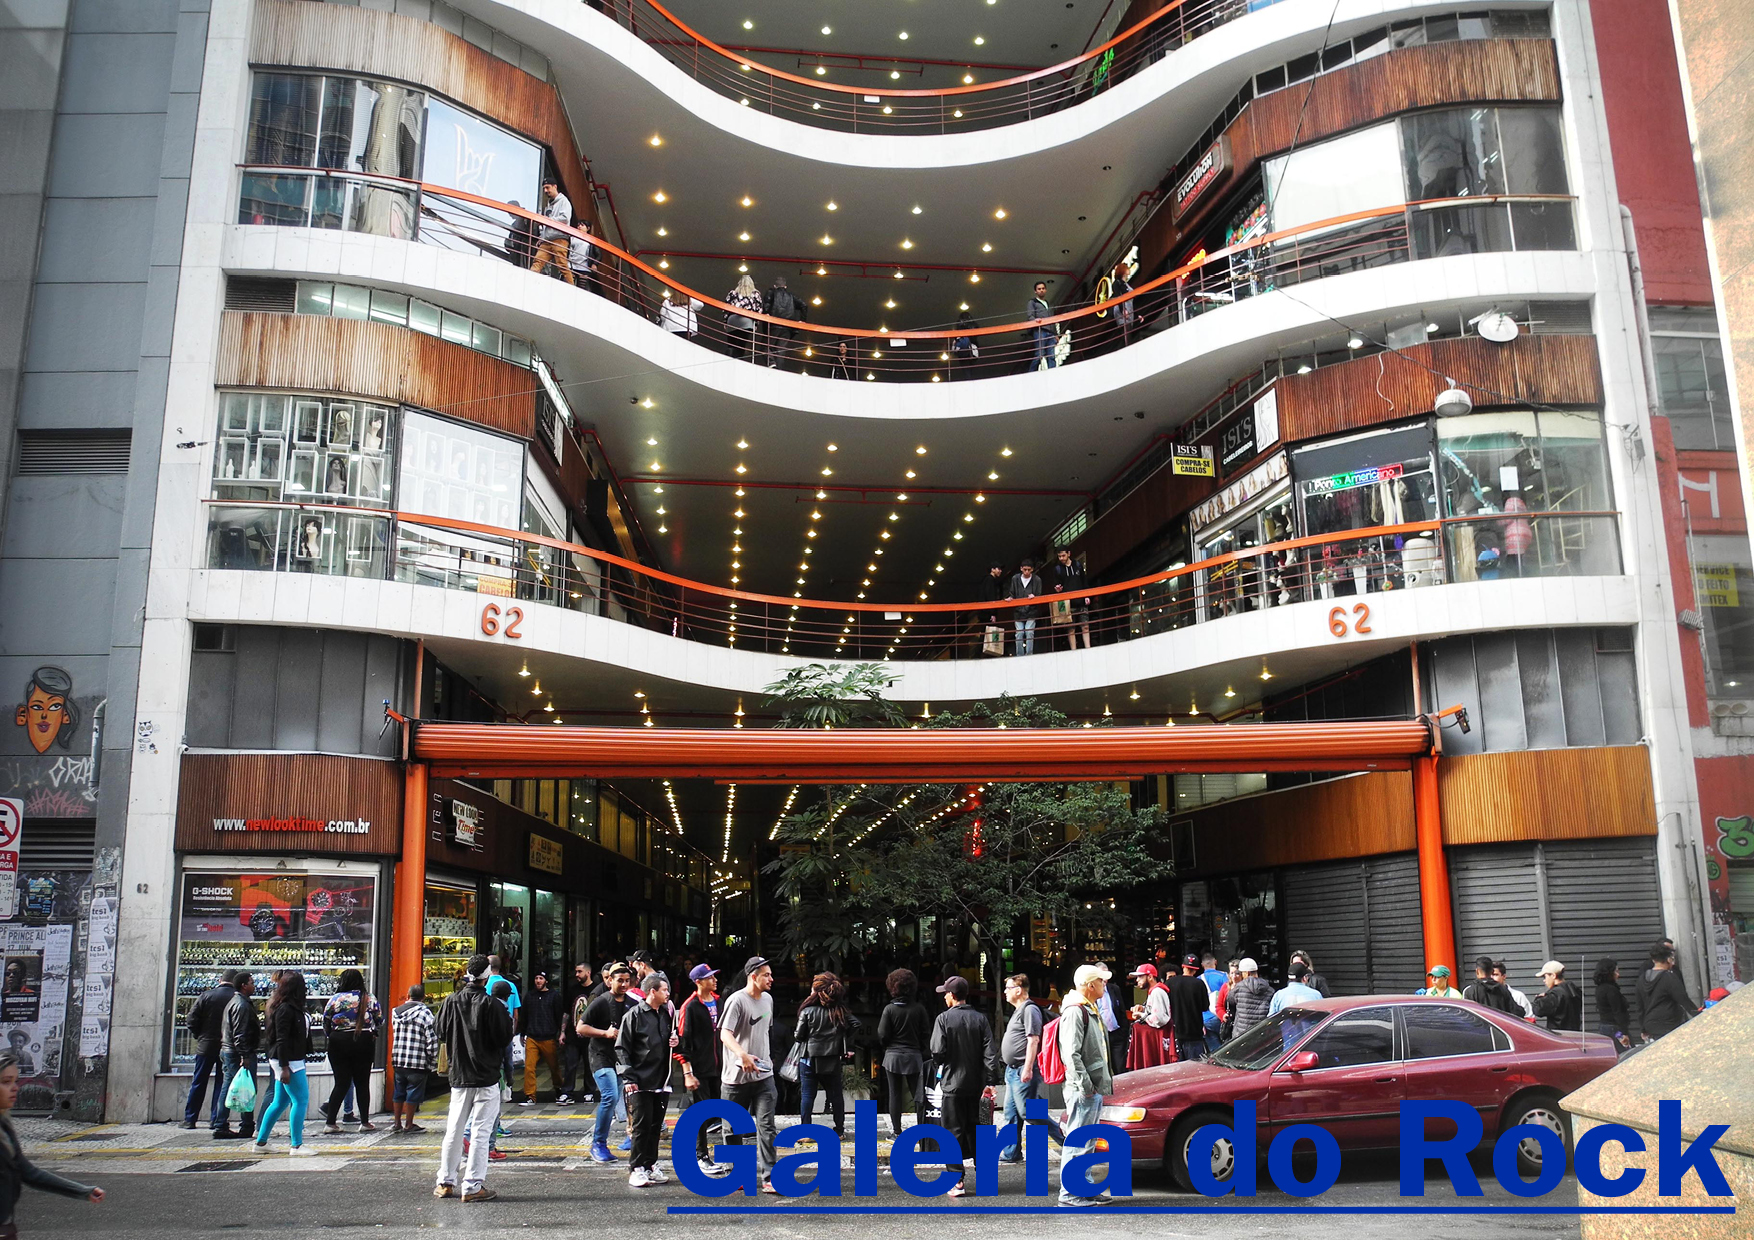 Galeria Do Rock Rock Gallery Shopping Mall Facade in Dowtown Sao Paulo -  Sao Paulo, Brazil Editorial Stock Image - Image of paulo, scene: 107889699